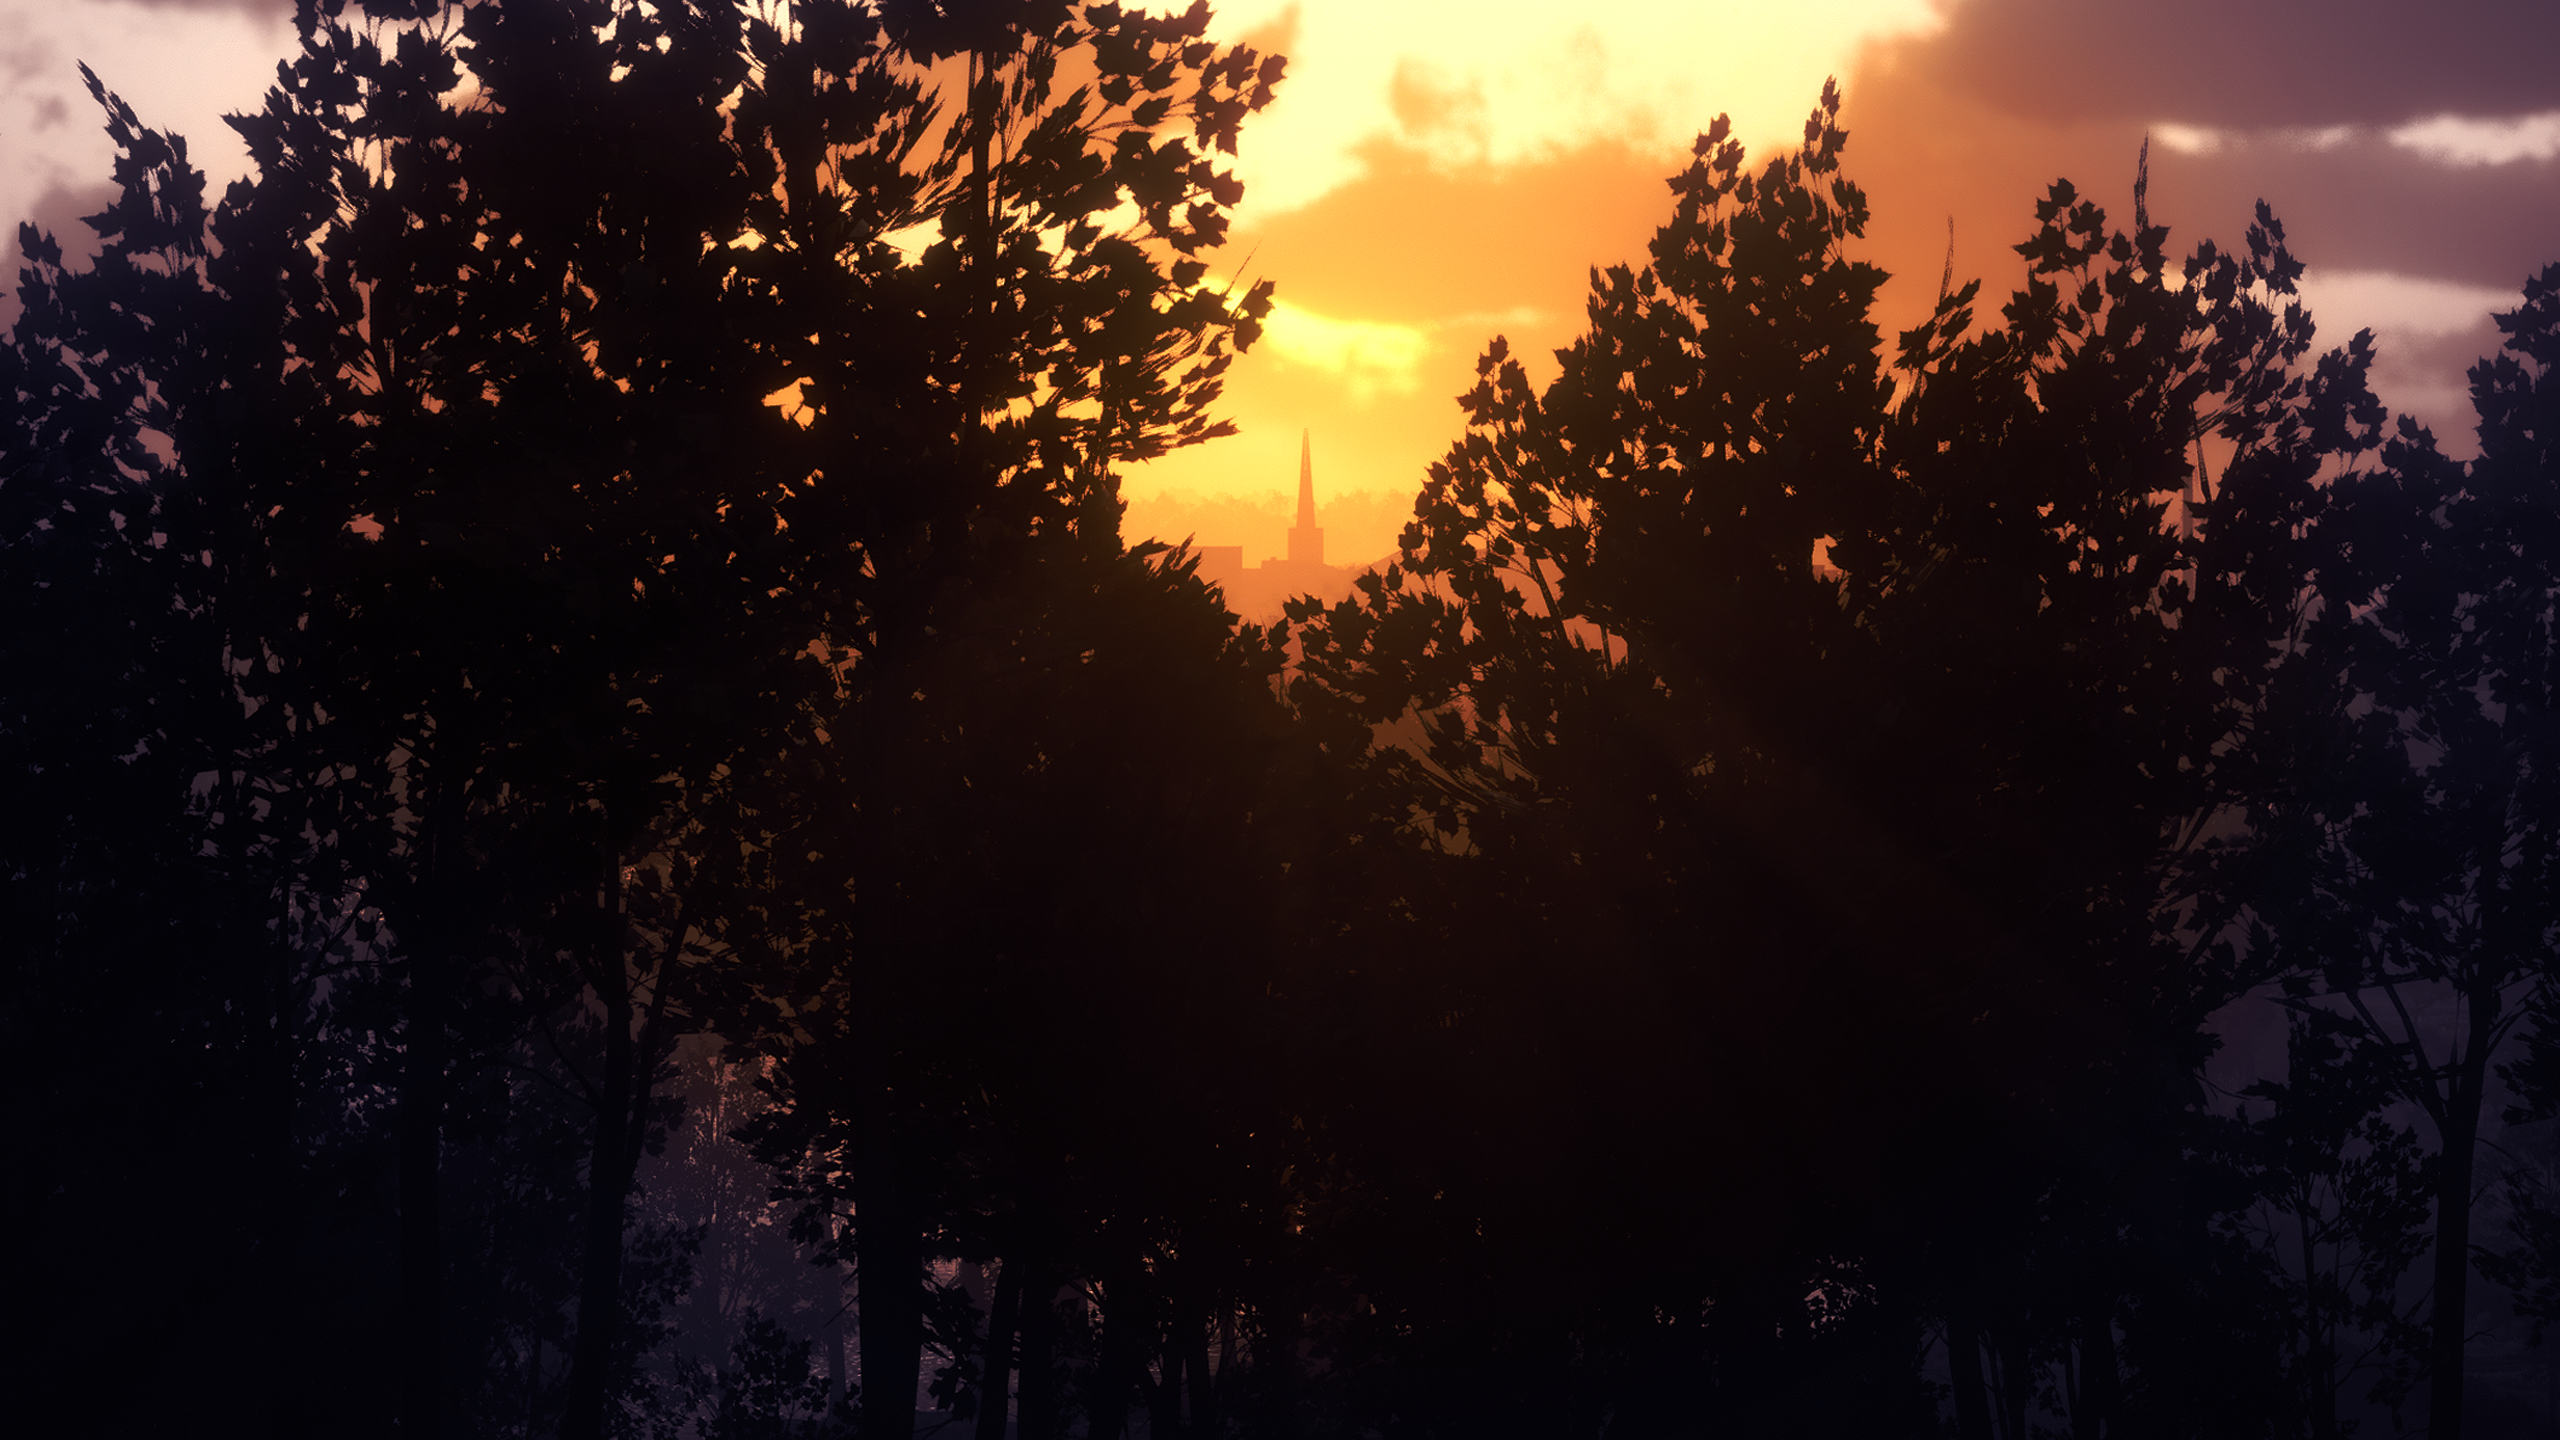 Red Dead Redemption 2 Nature Dusk Dawn Church Sun Conure Sunset Sunset Glow Sky Clouds Sunlight Tree 2560x1440